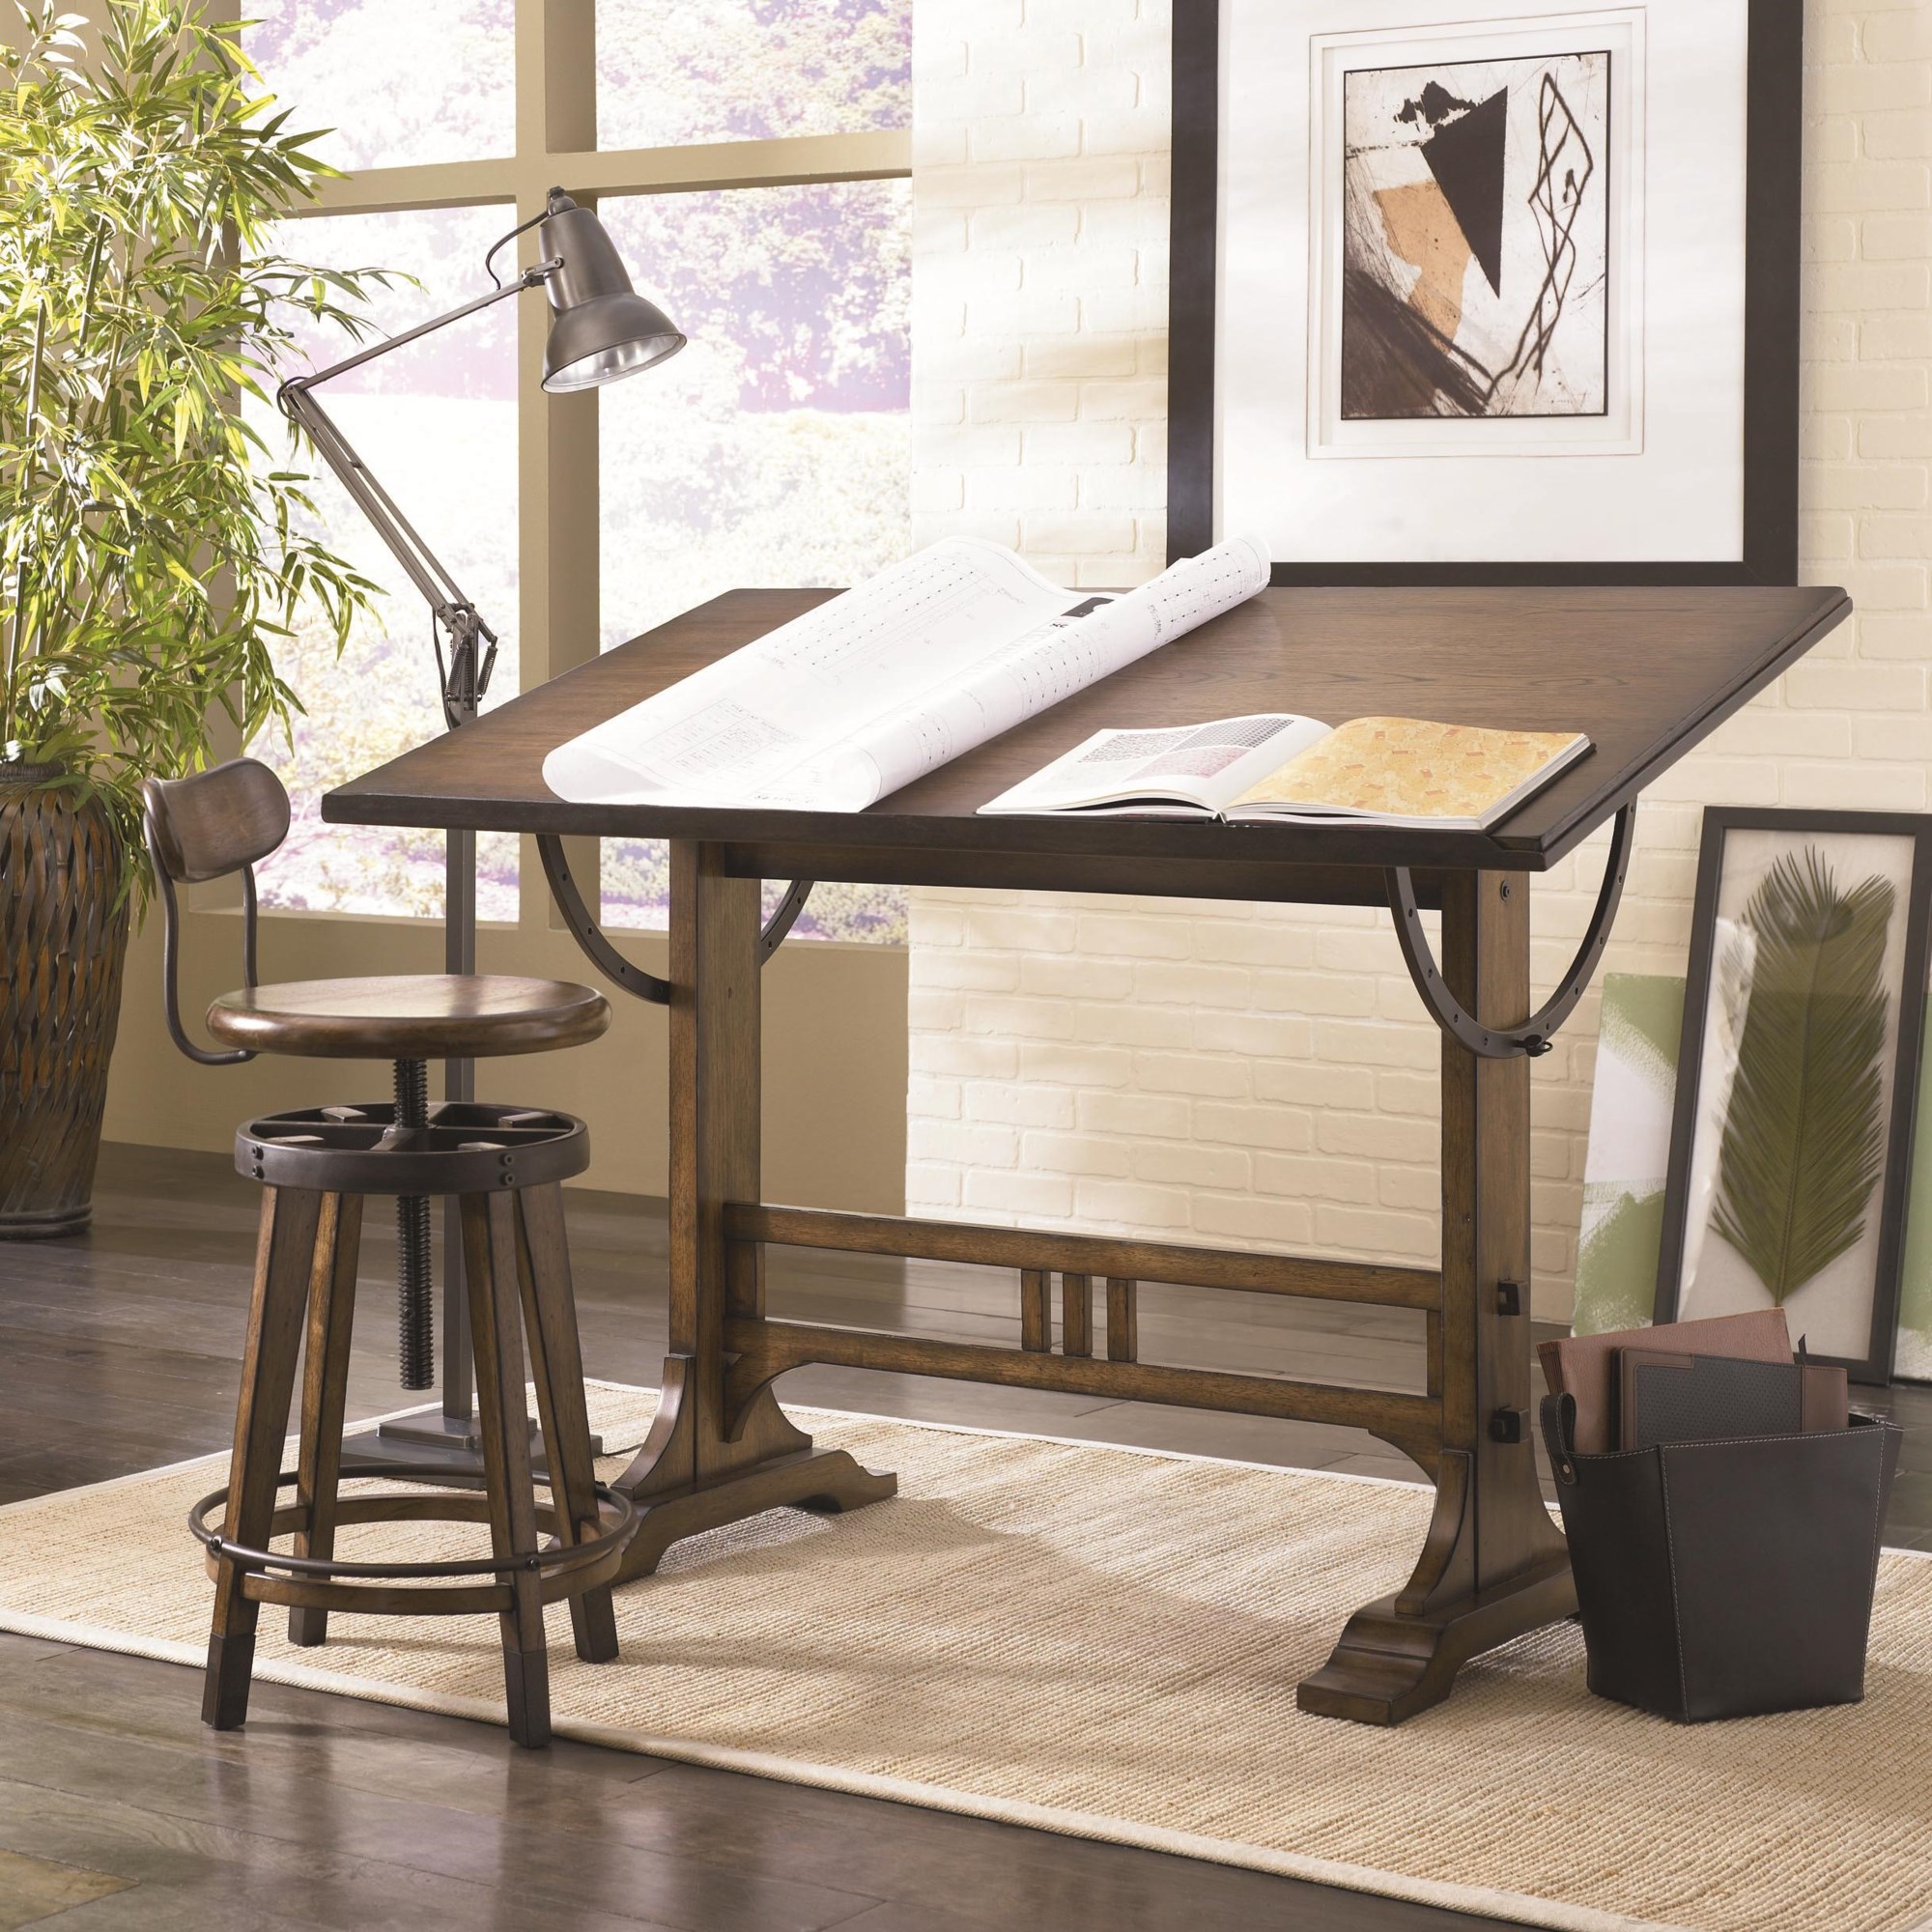 Table | Wayside Mattress Home Weathered Hammary & Oak Studio 166-940 Architect Furniture Desks Desk Mission | Desk -